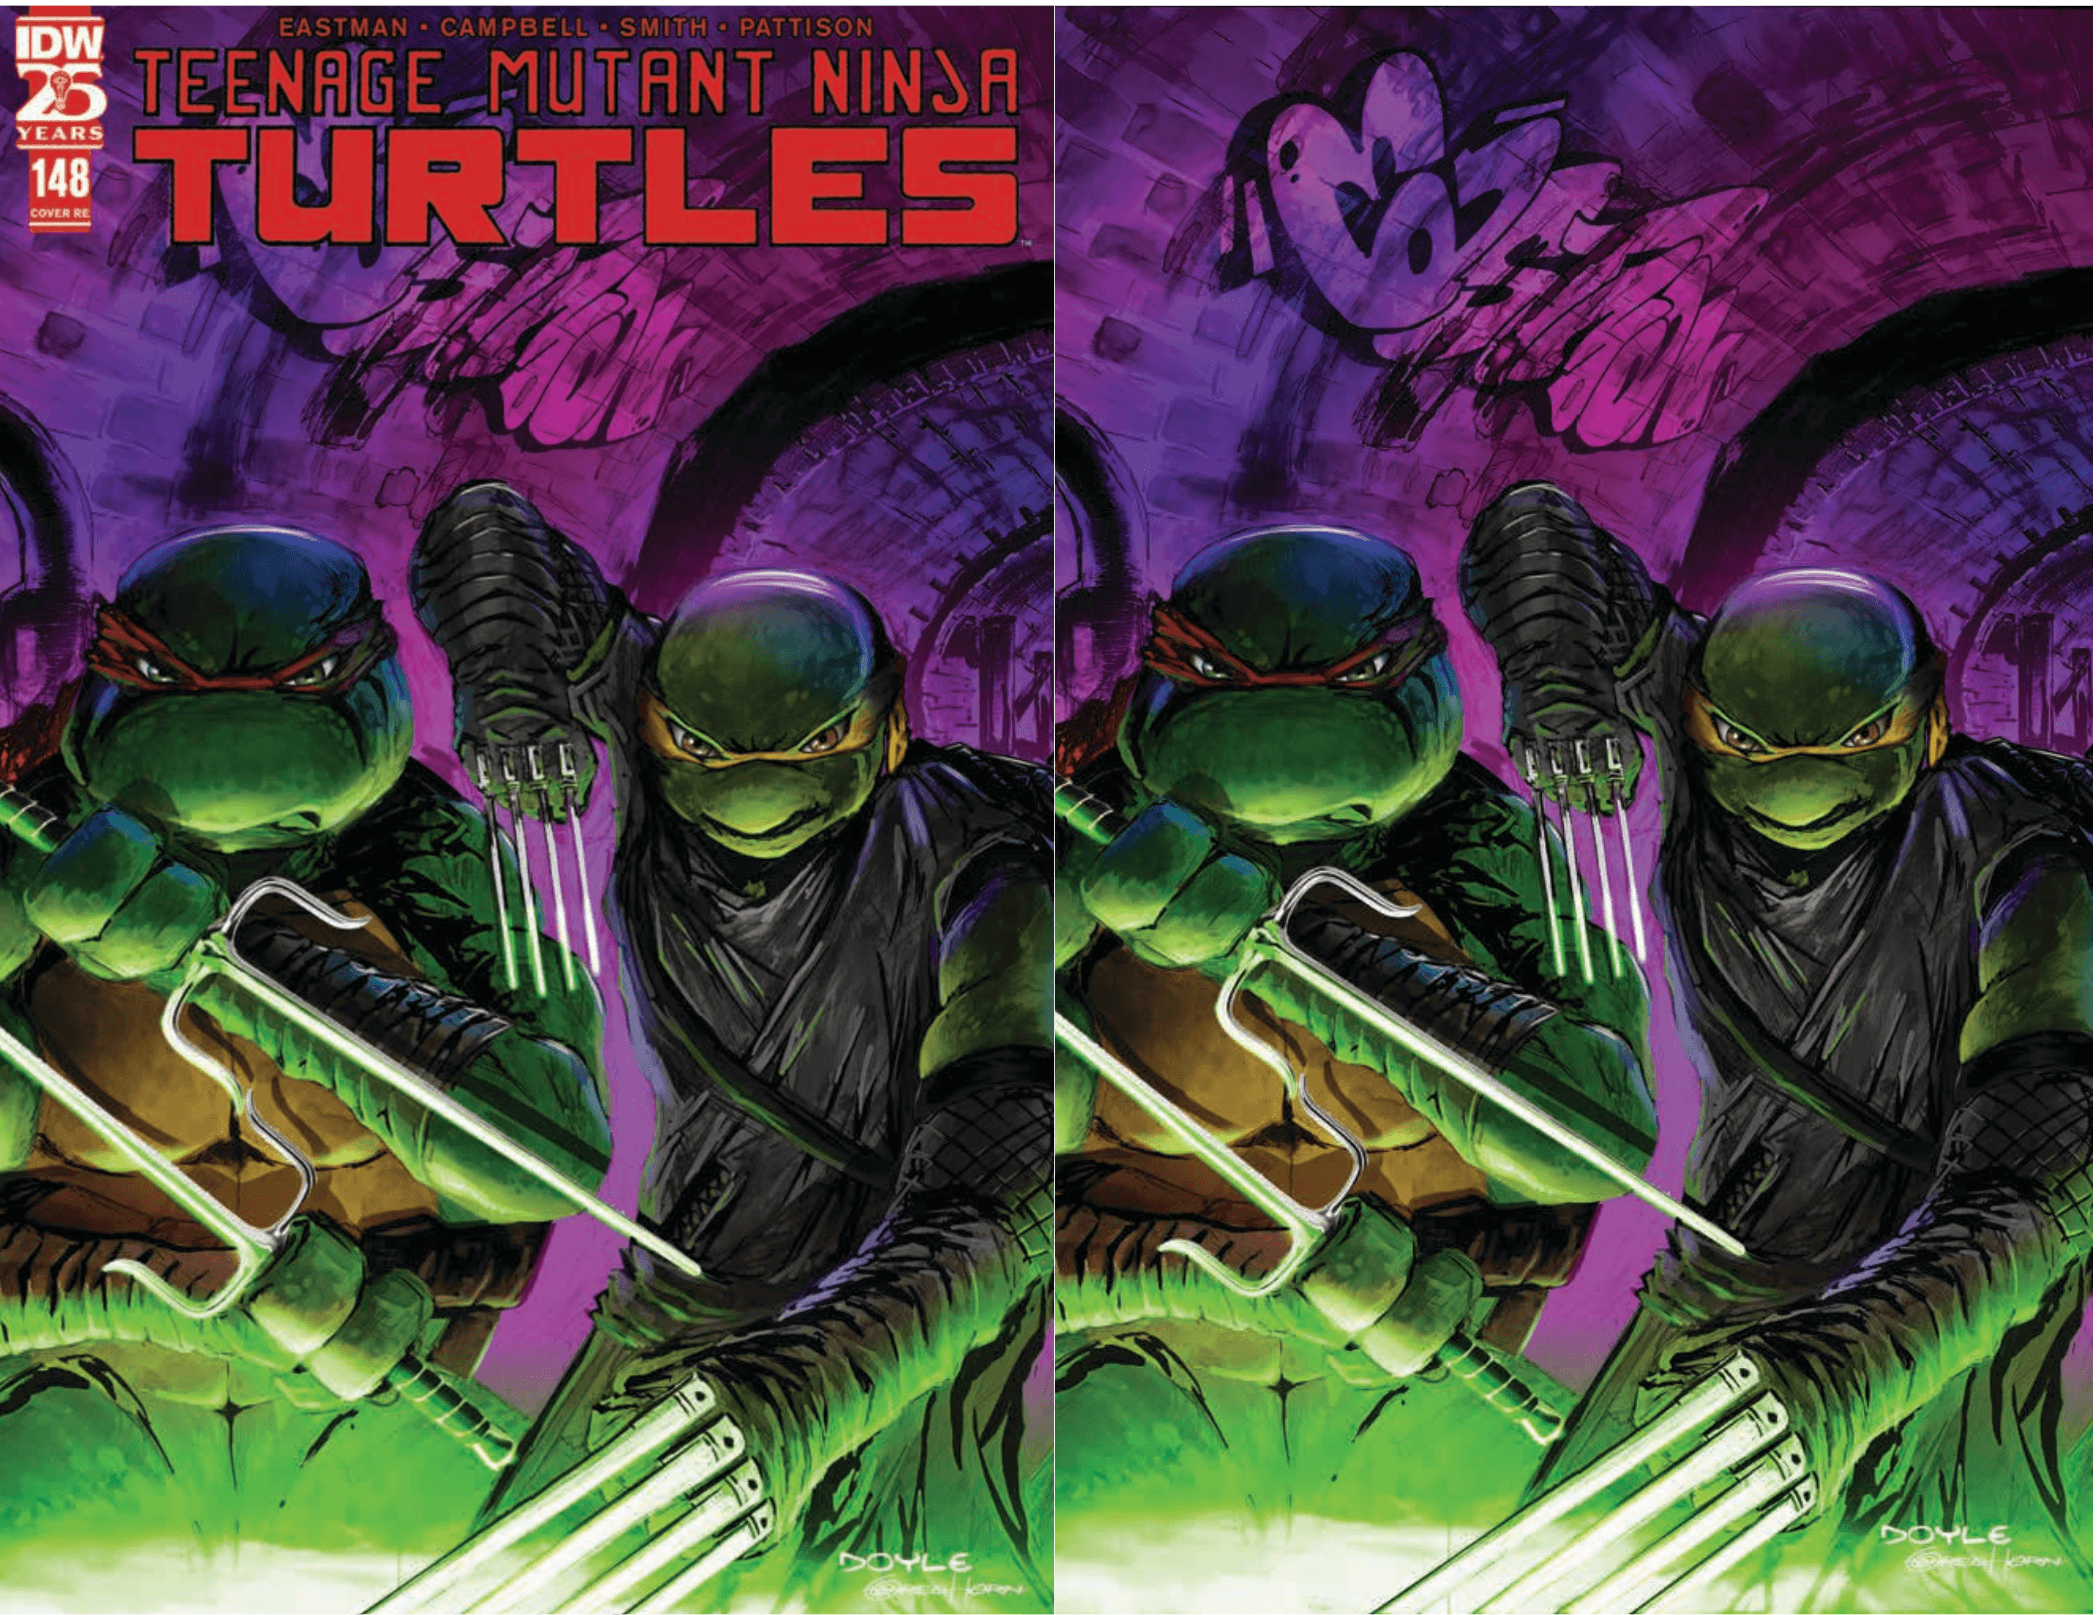 Teenage Mutant Ninja Turtles #148 - Lightning Comix Exclusive - Trade Dress & Virgin Bundle - LIGHTNING COMIX